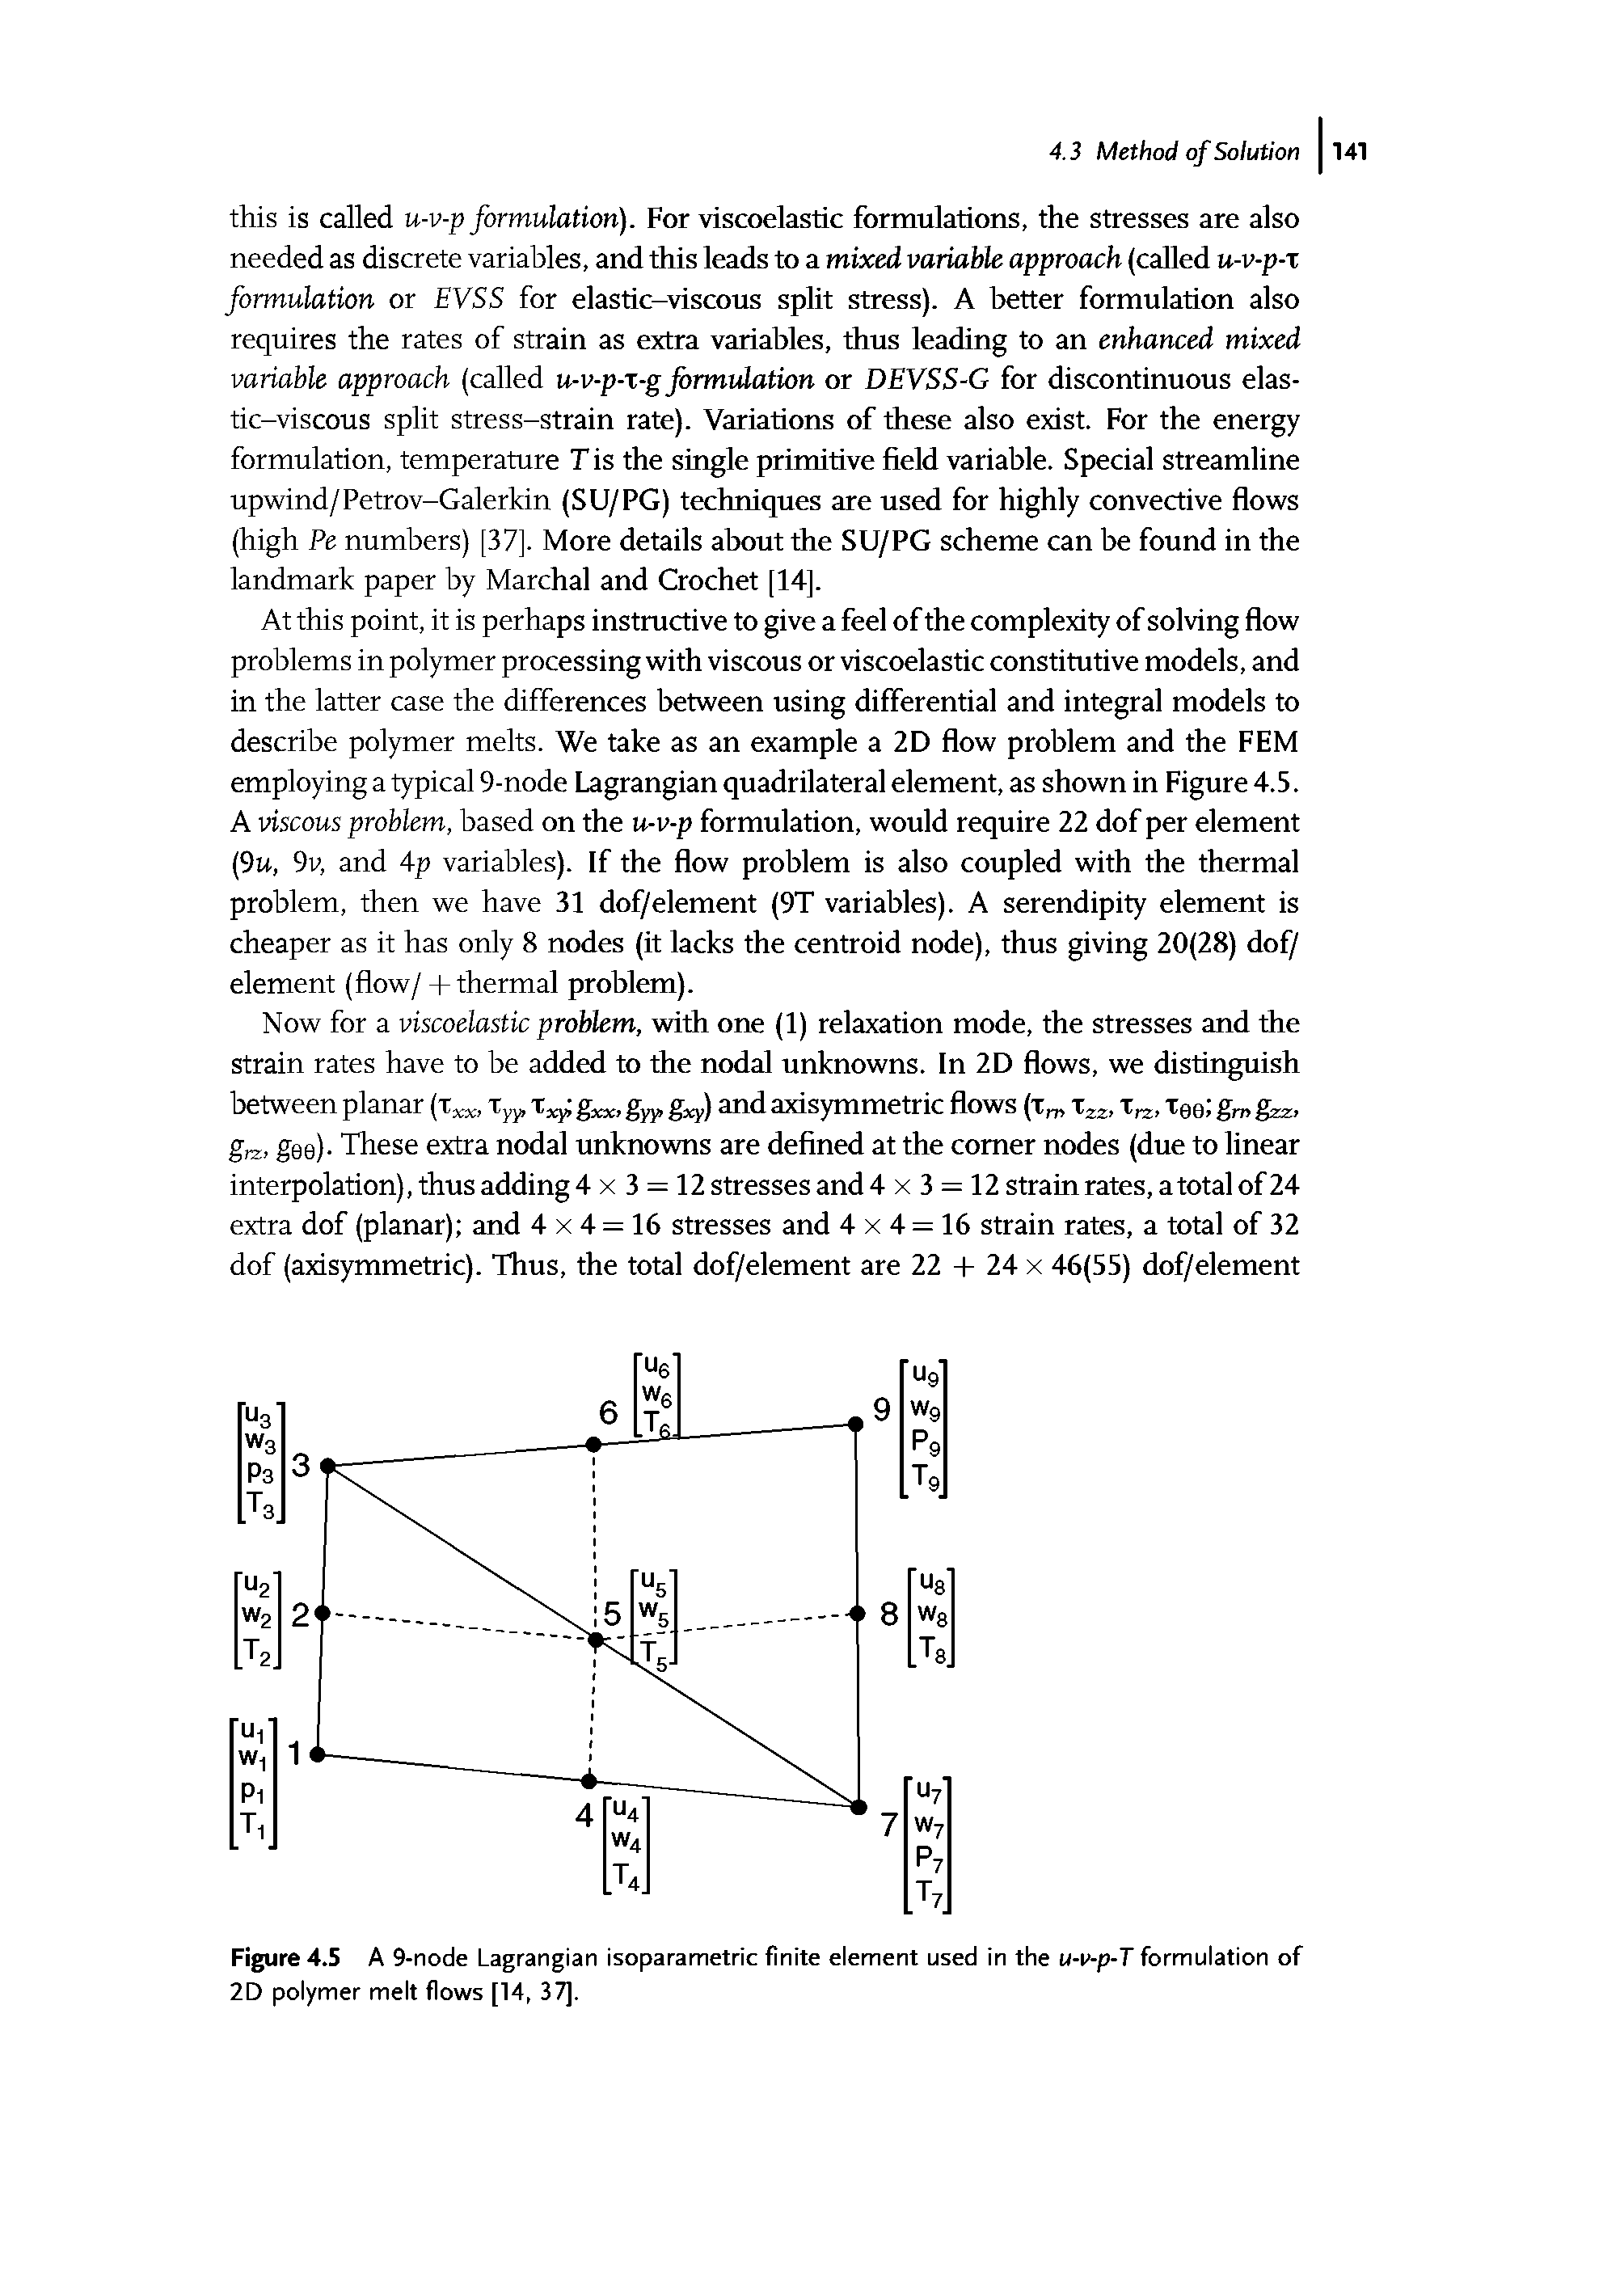 Figure 4.5 A 9-node Lagrangian isoparametric finite element used in the u-v-p-T formulation of 2D polymer melt flows [14, 37].